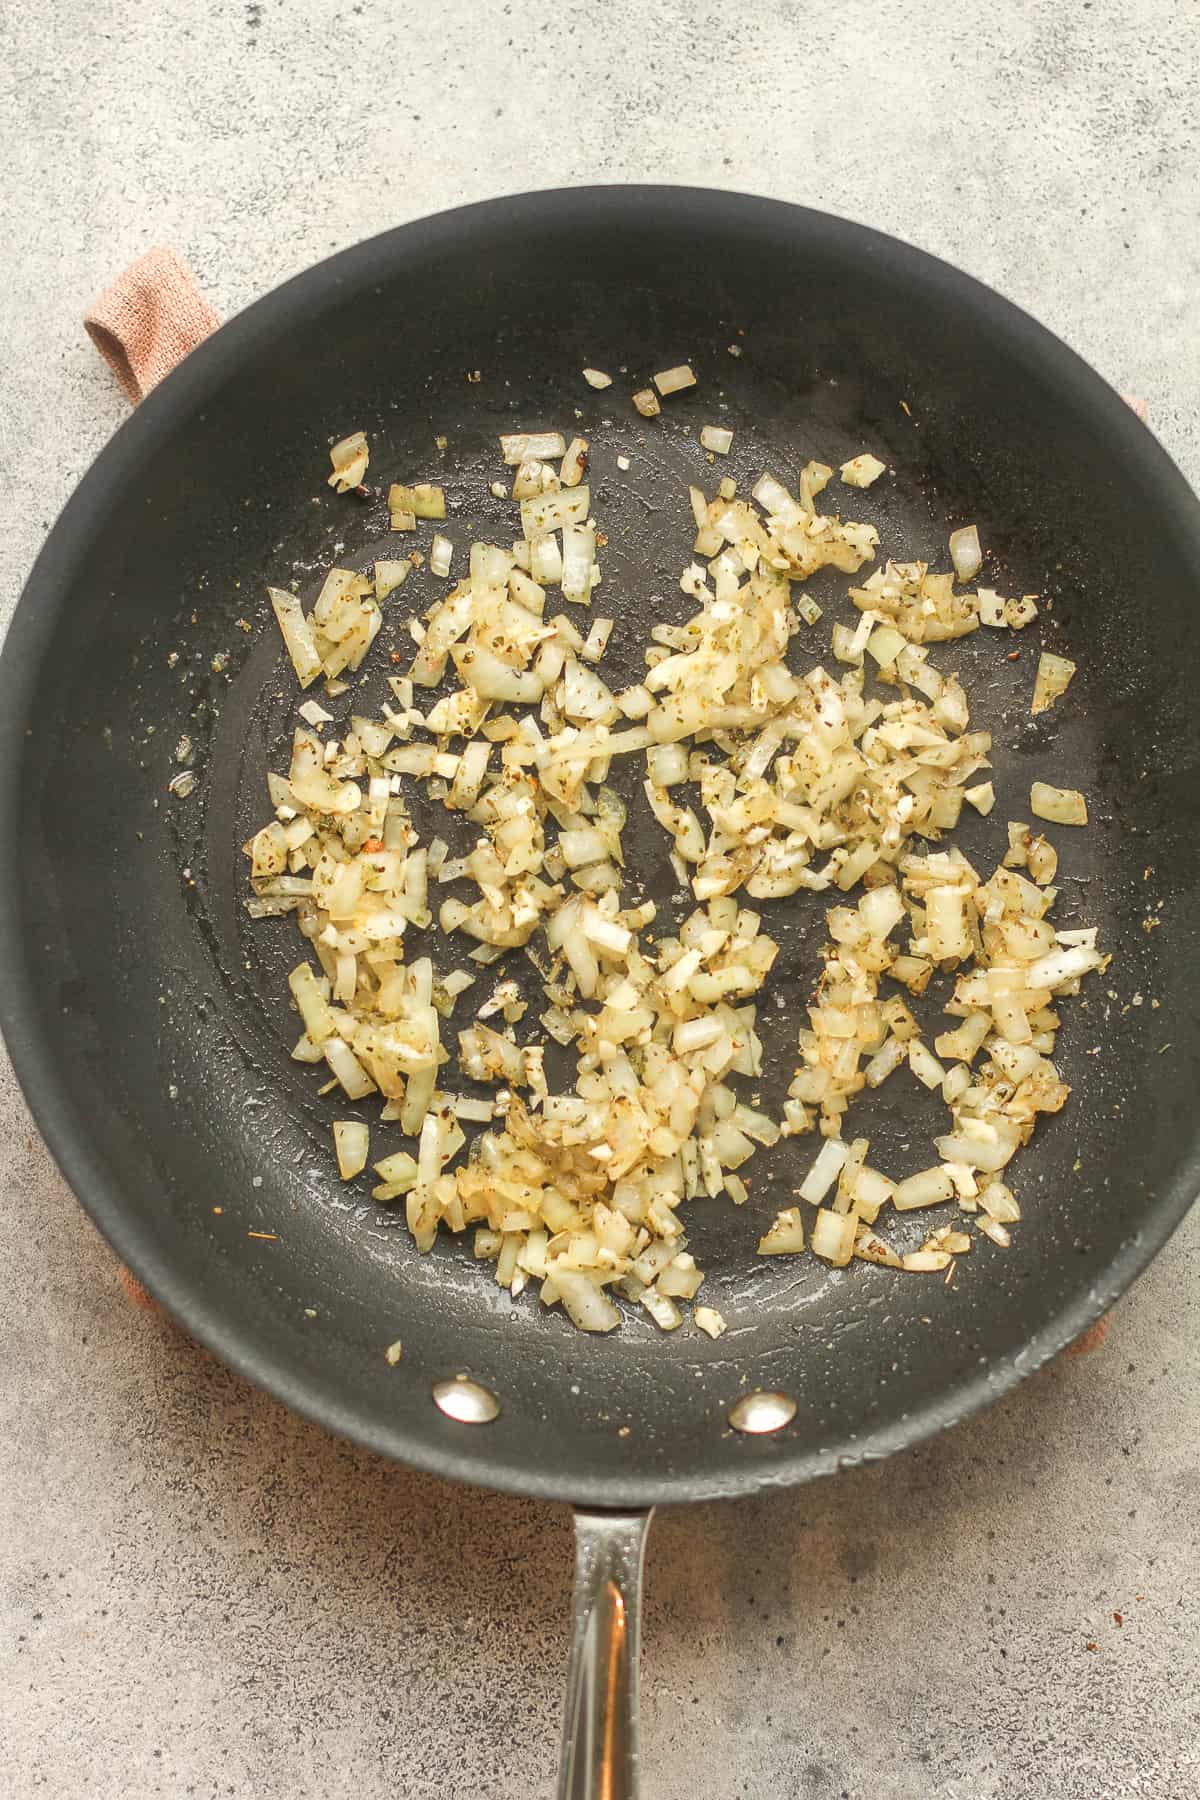 A pan of sautéed onions and seasonings.